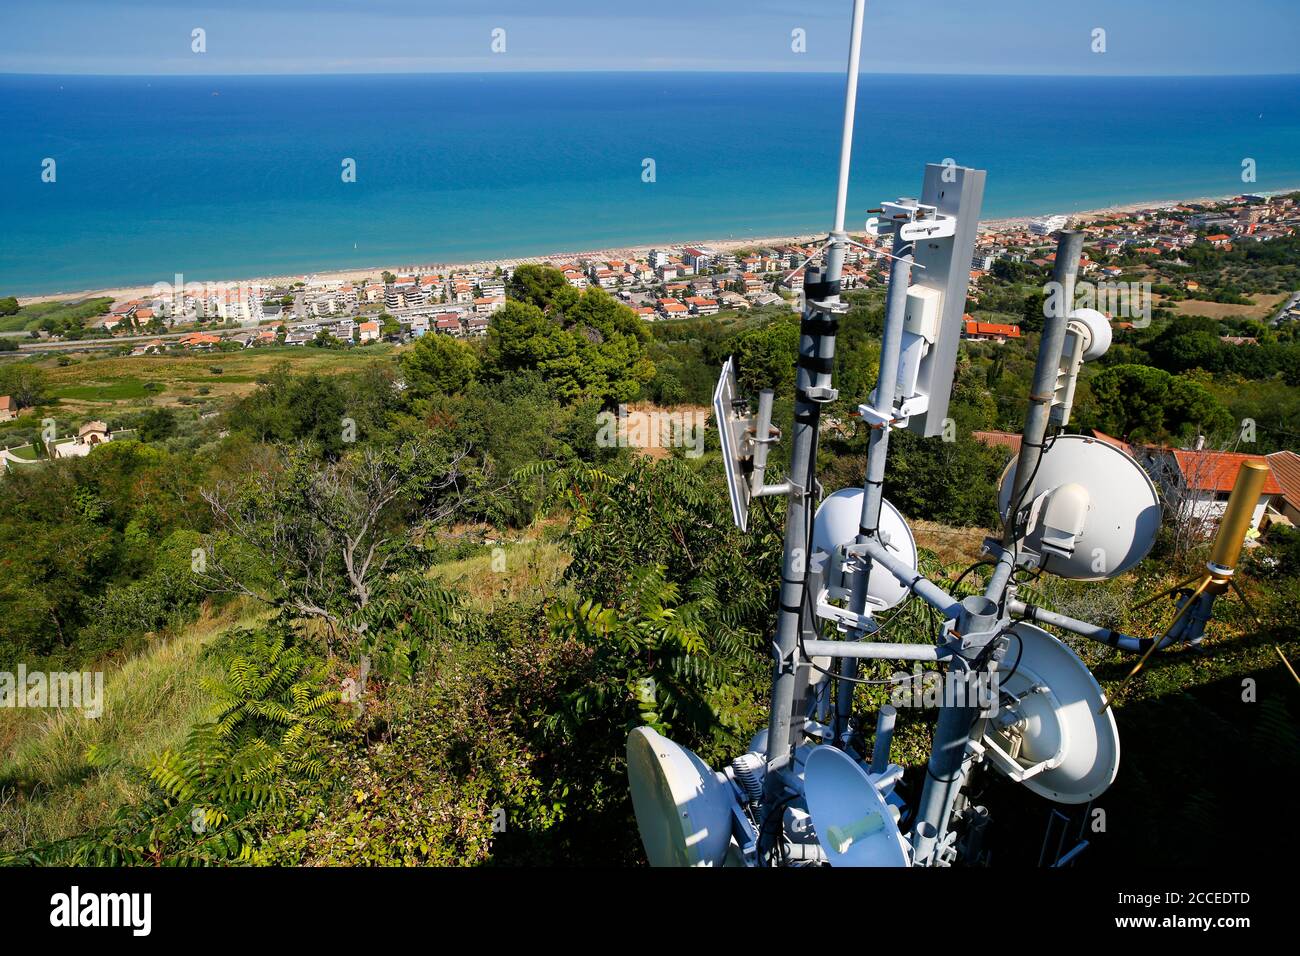 Communication aerials overlook Silvi Marina and the Adriatic Sea from Silvi Paese, Abruzzo, Italy. Stock Photo